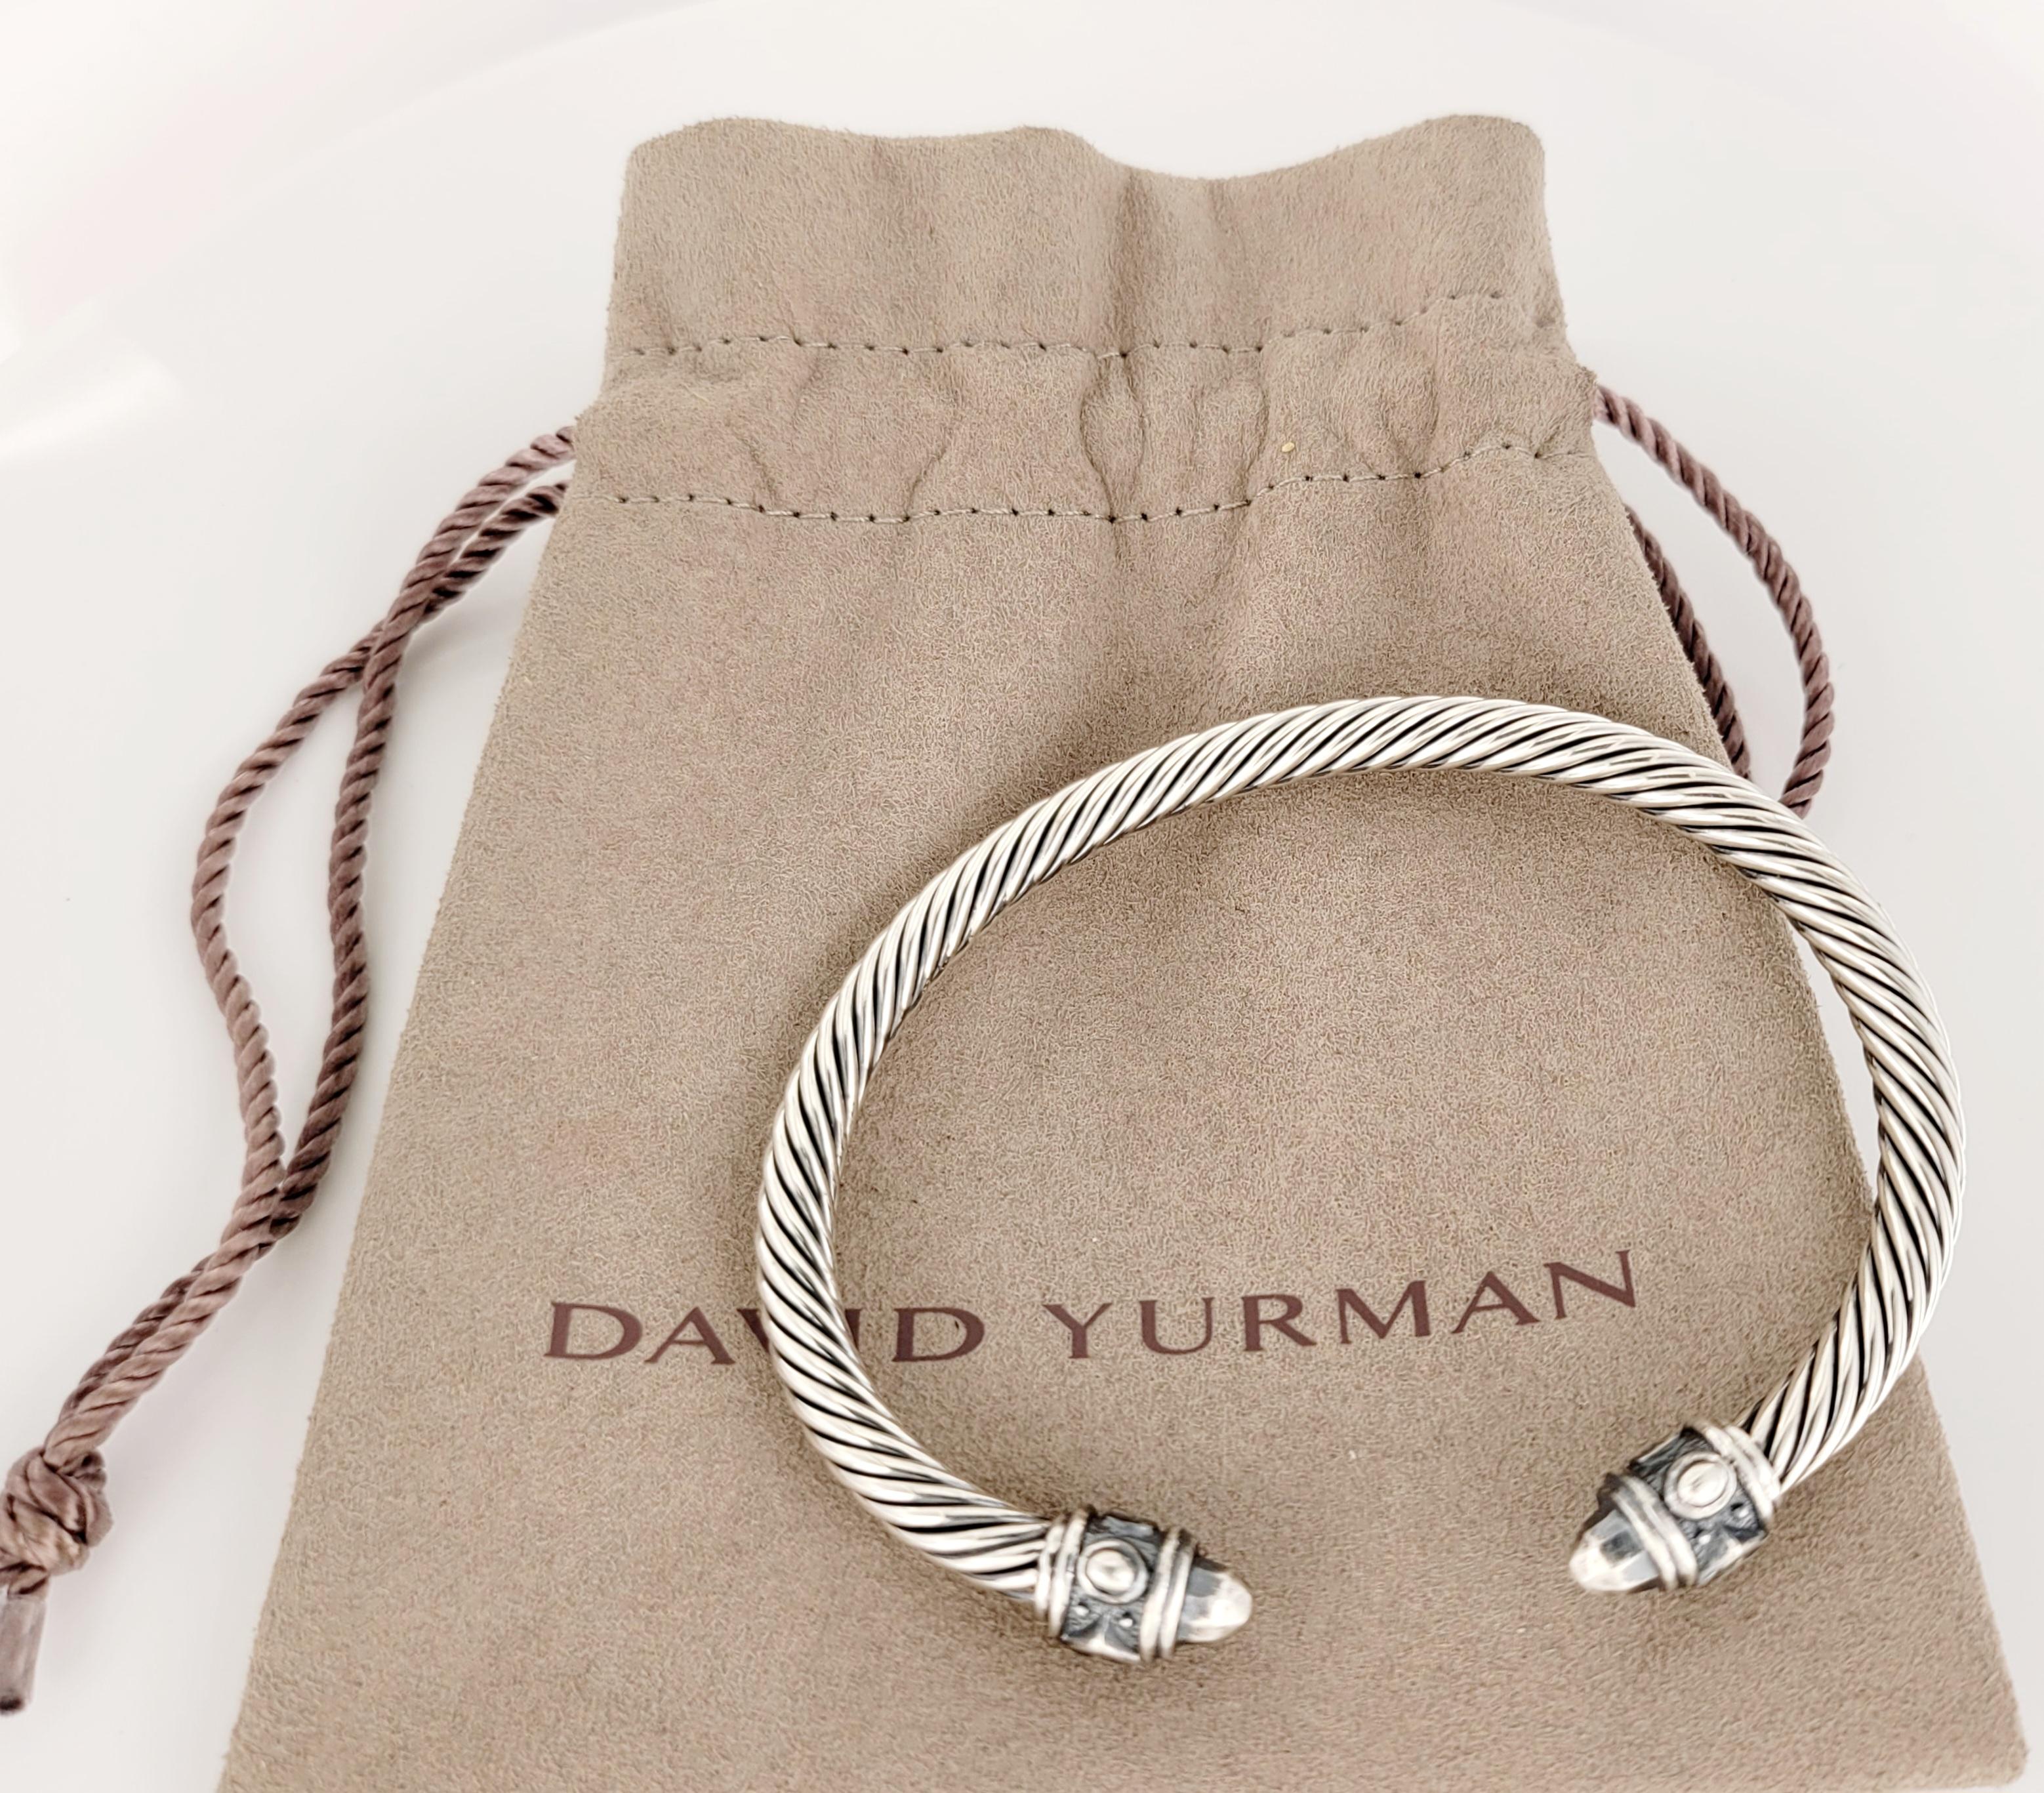 Brand David yurman 

Metal Sterling Silver 925

Bracelet Size 7'' 

Bracelet width 5mm

Bracelet weight 29.6

Condition New, never worn

Comes with David Yurman pouch 